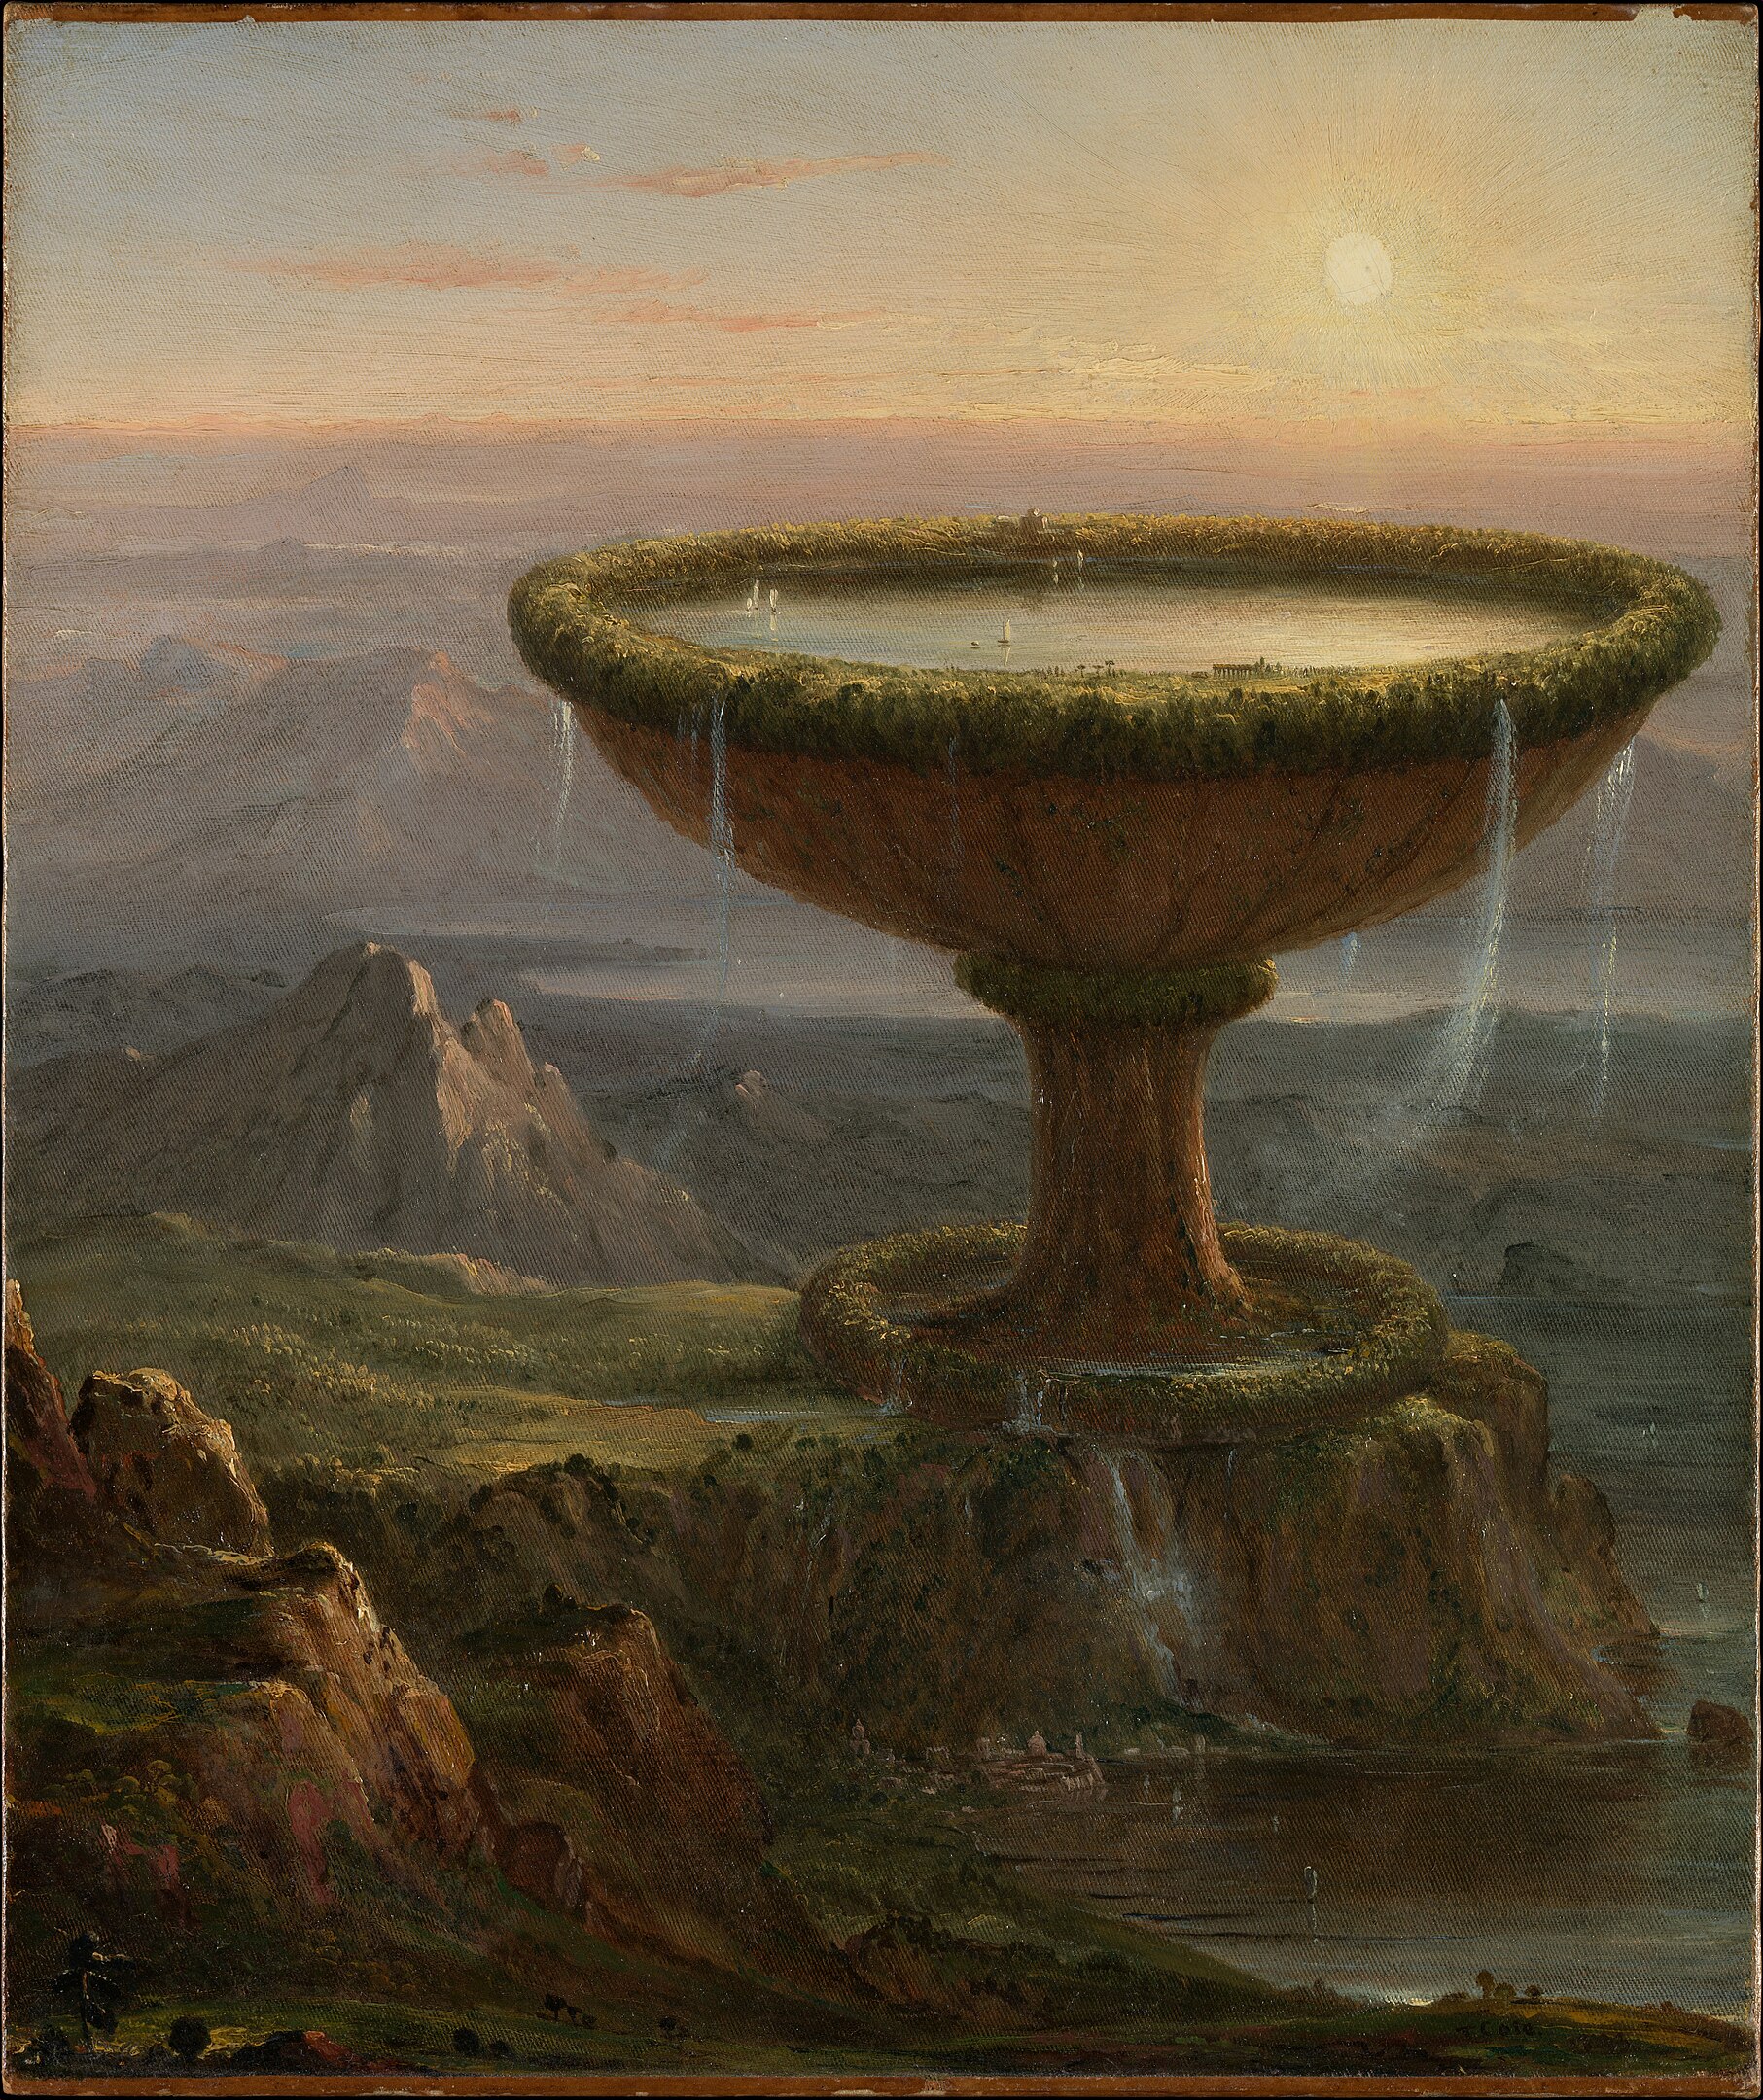 A massive vegetation encrusted goblet within a classical landscape